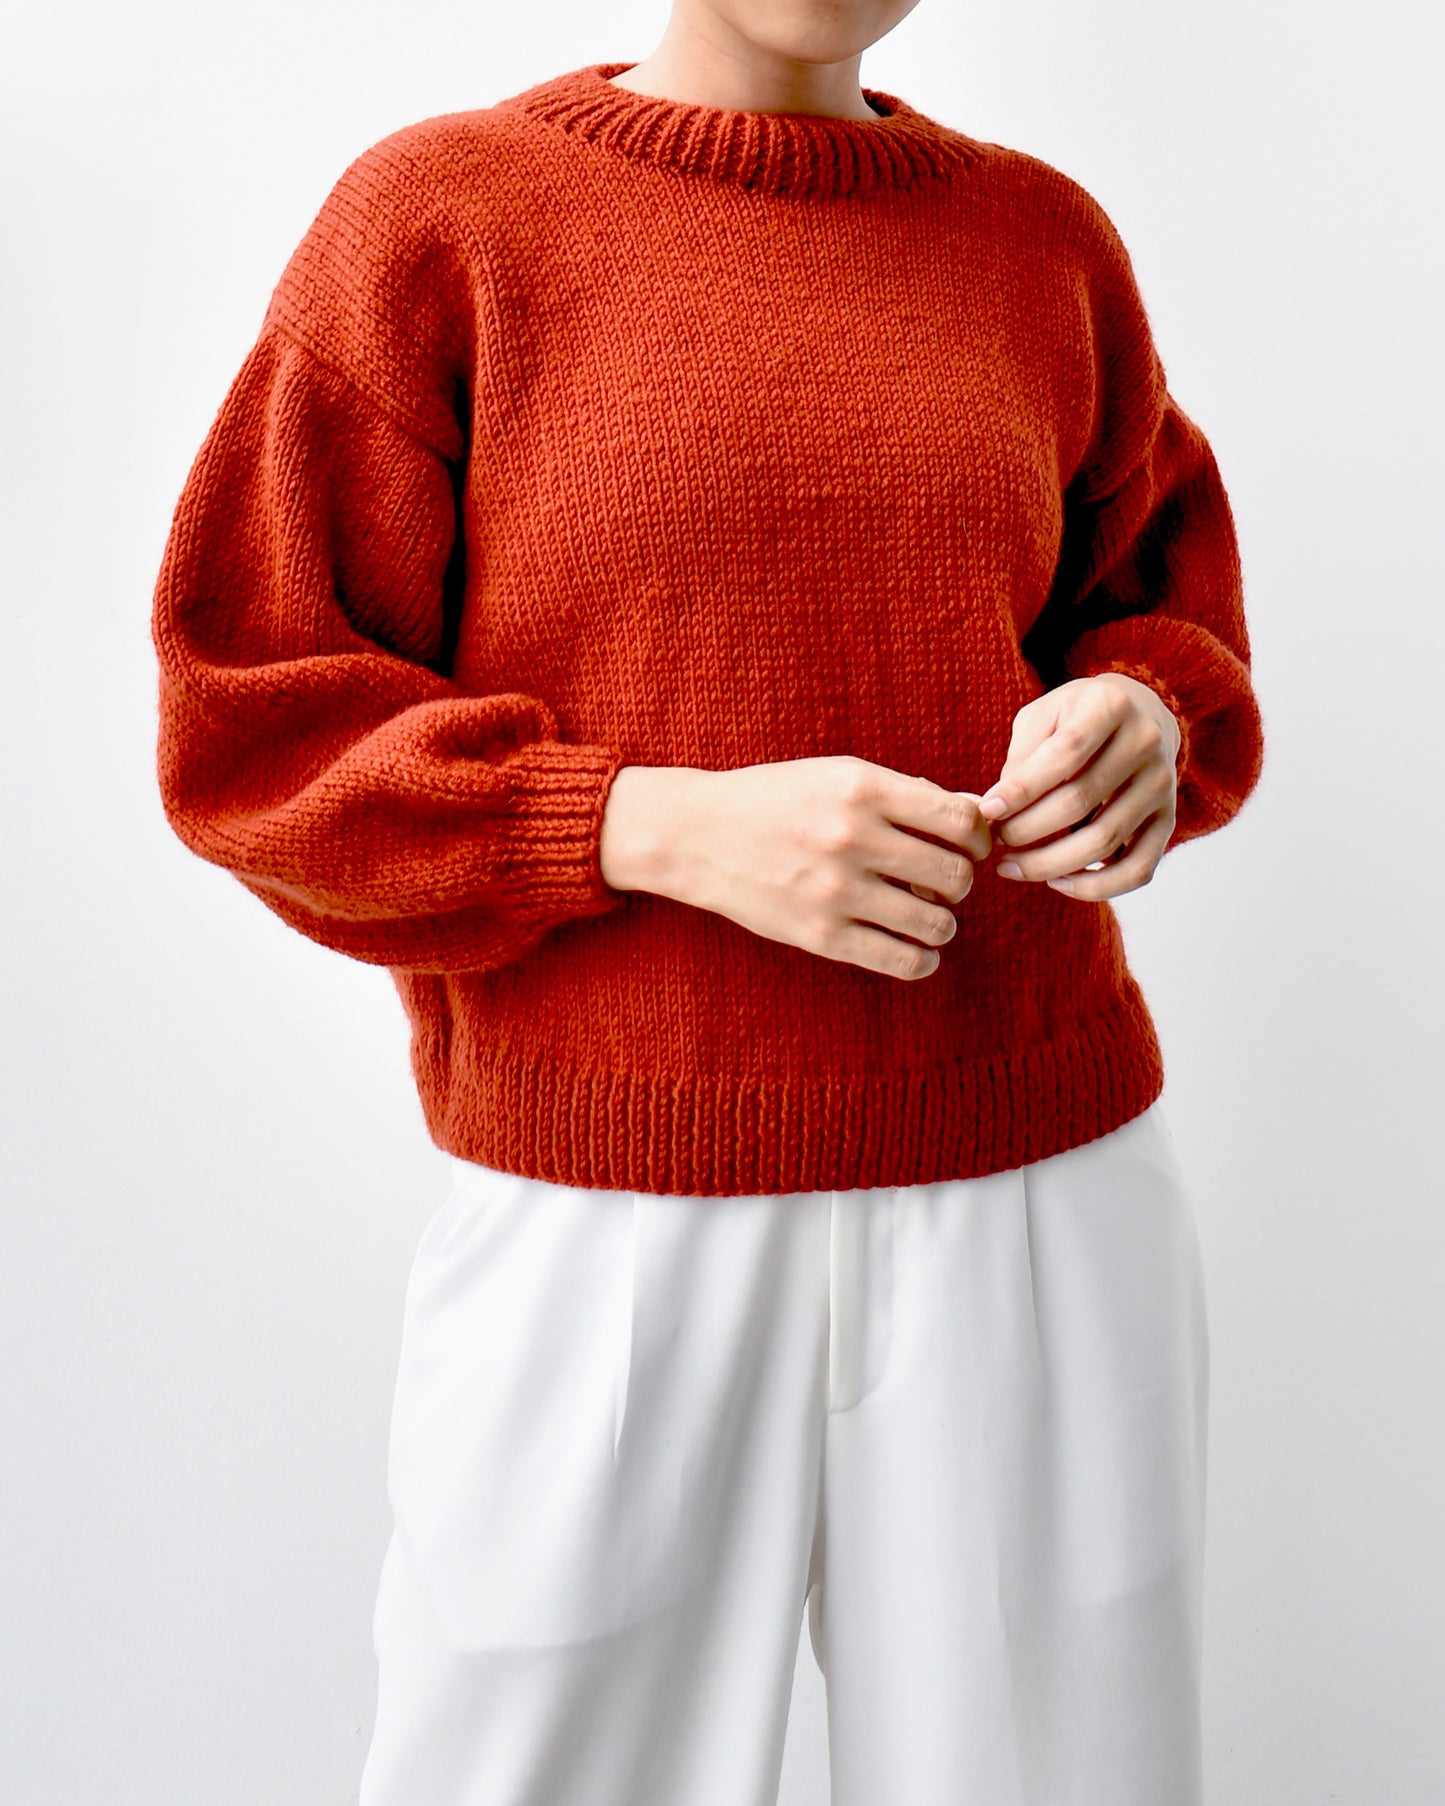 Sweater No.2 | Easy knitting sweater pattern